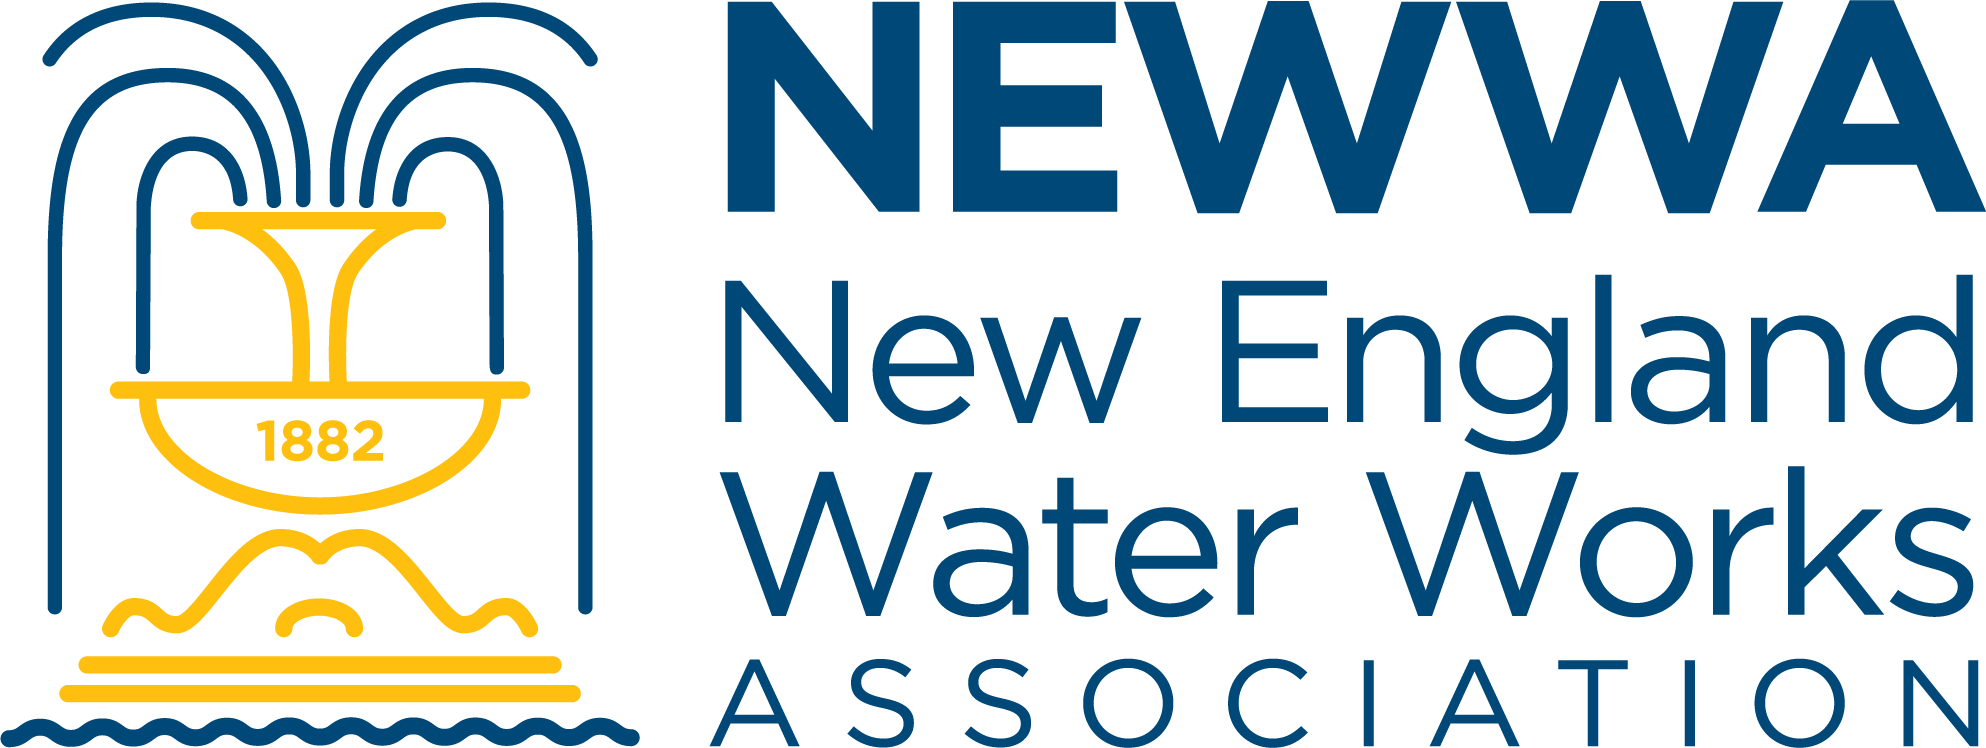 NEWA logo